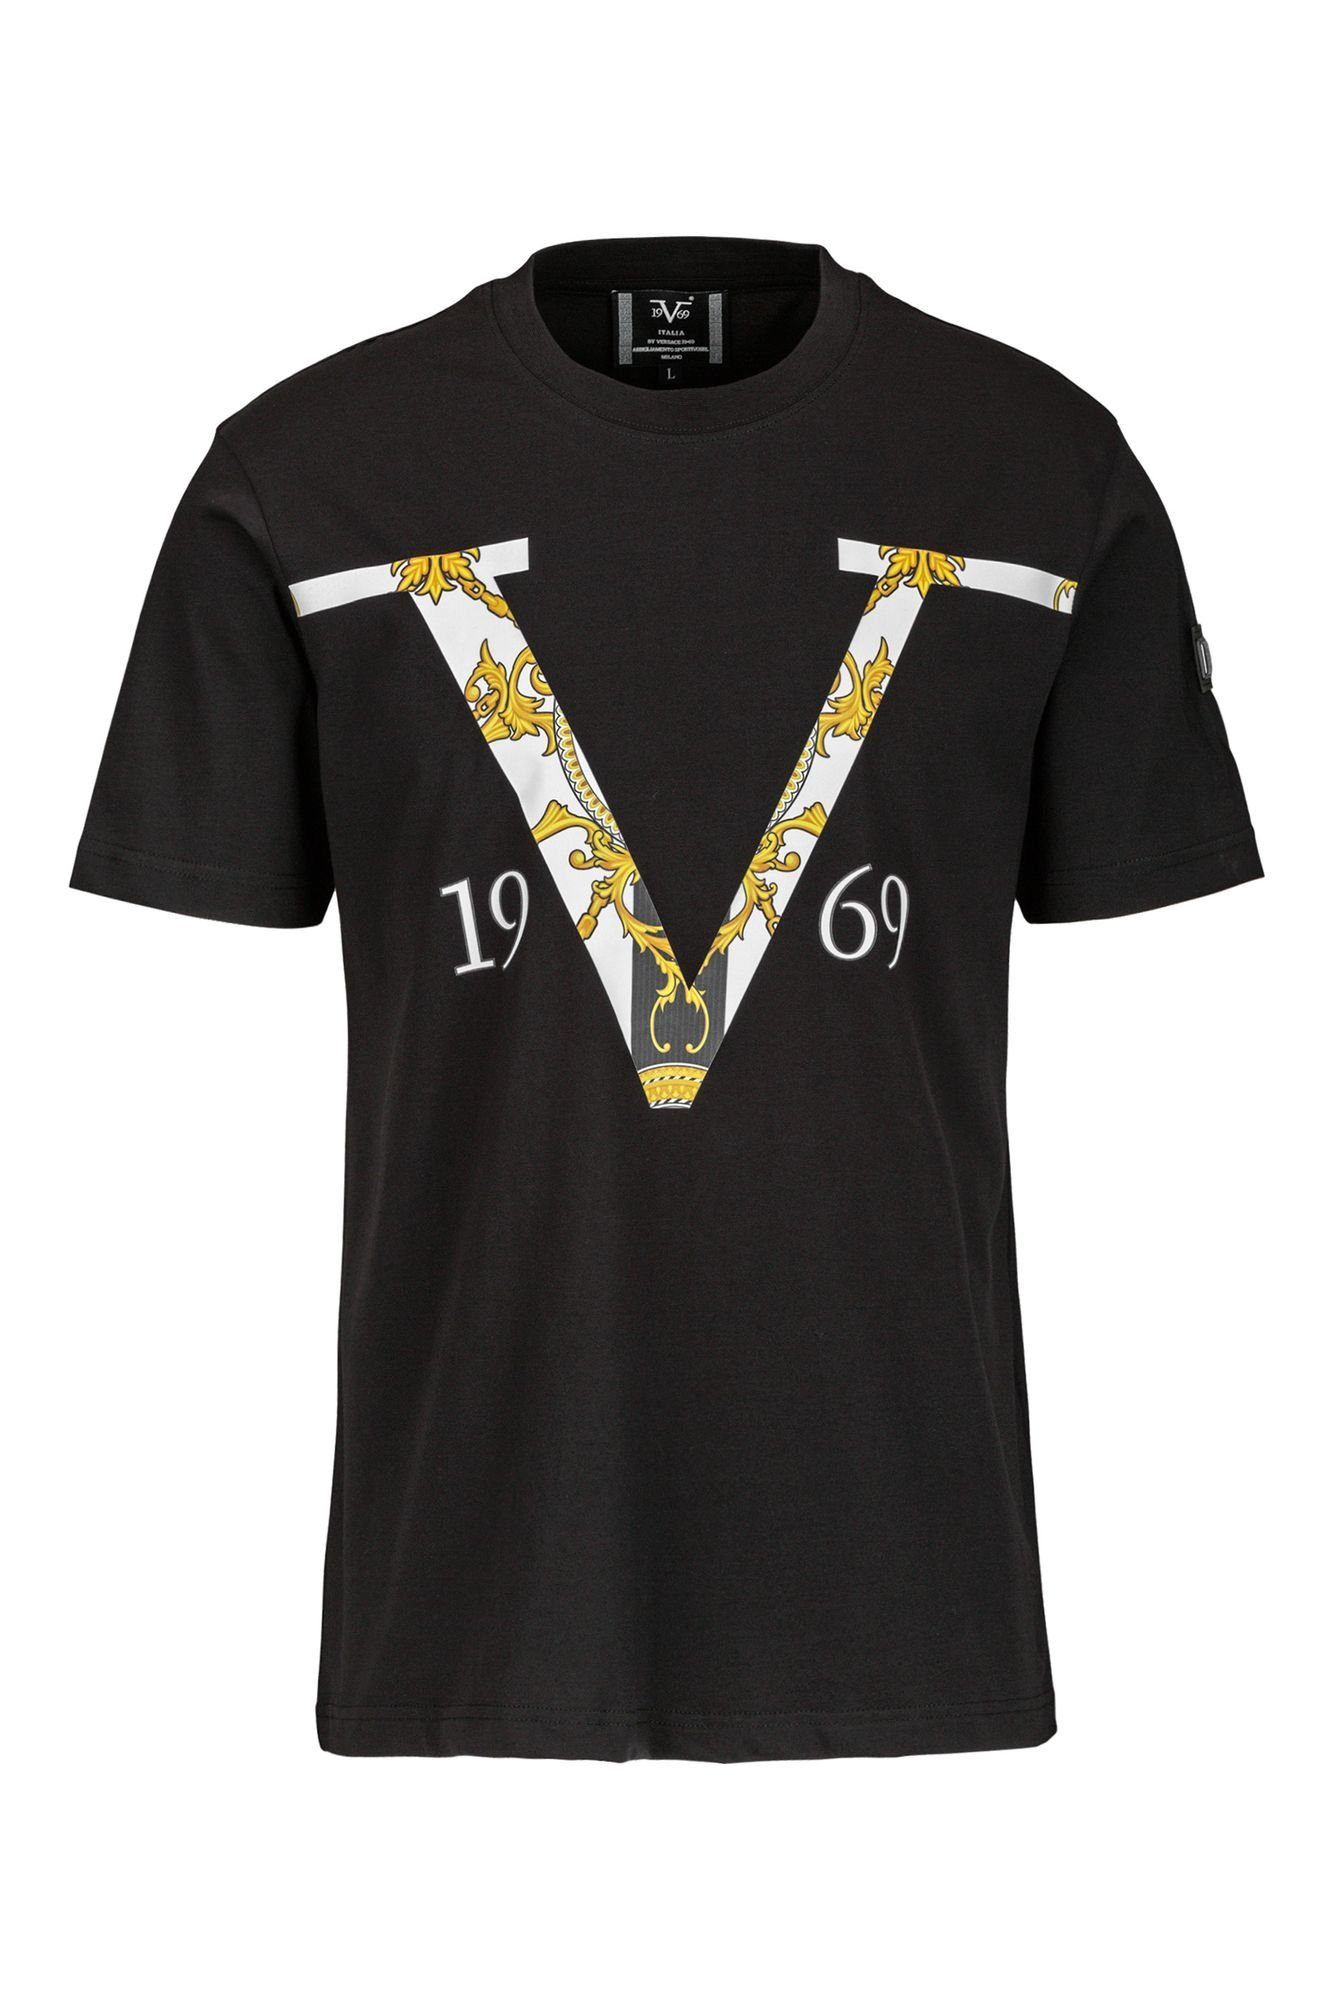 19V69 Italia by Versace T-Shirt Filippo